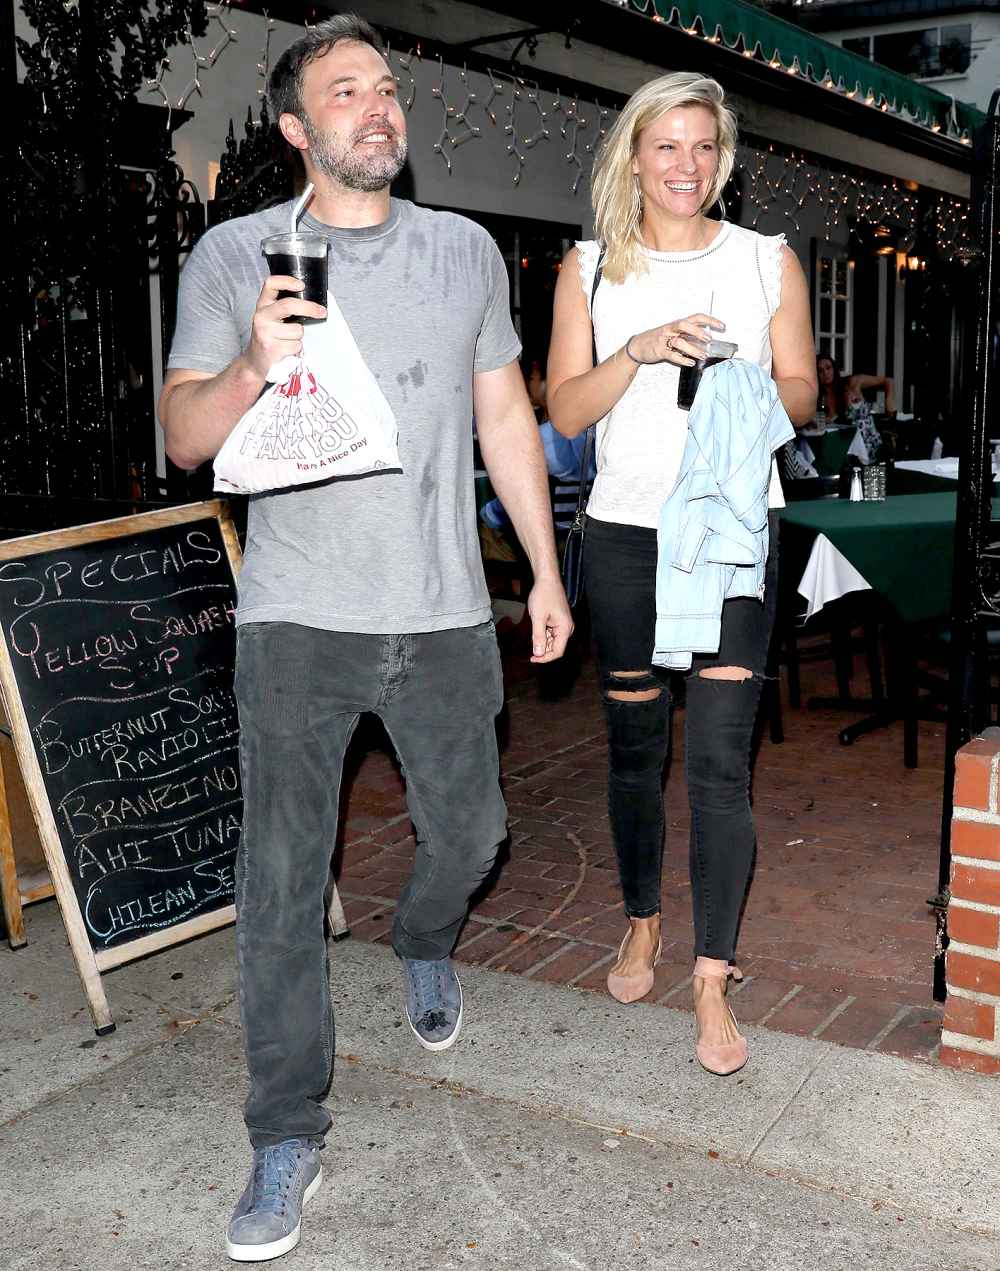 Ben Affleck exits the Beech Street Cafe restaurant after having some pizza with Lindsay Shookus on July 10, 2017.